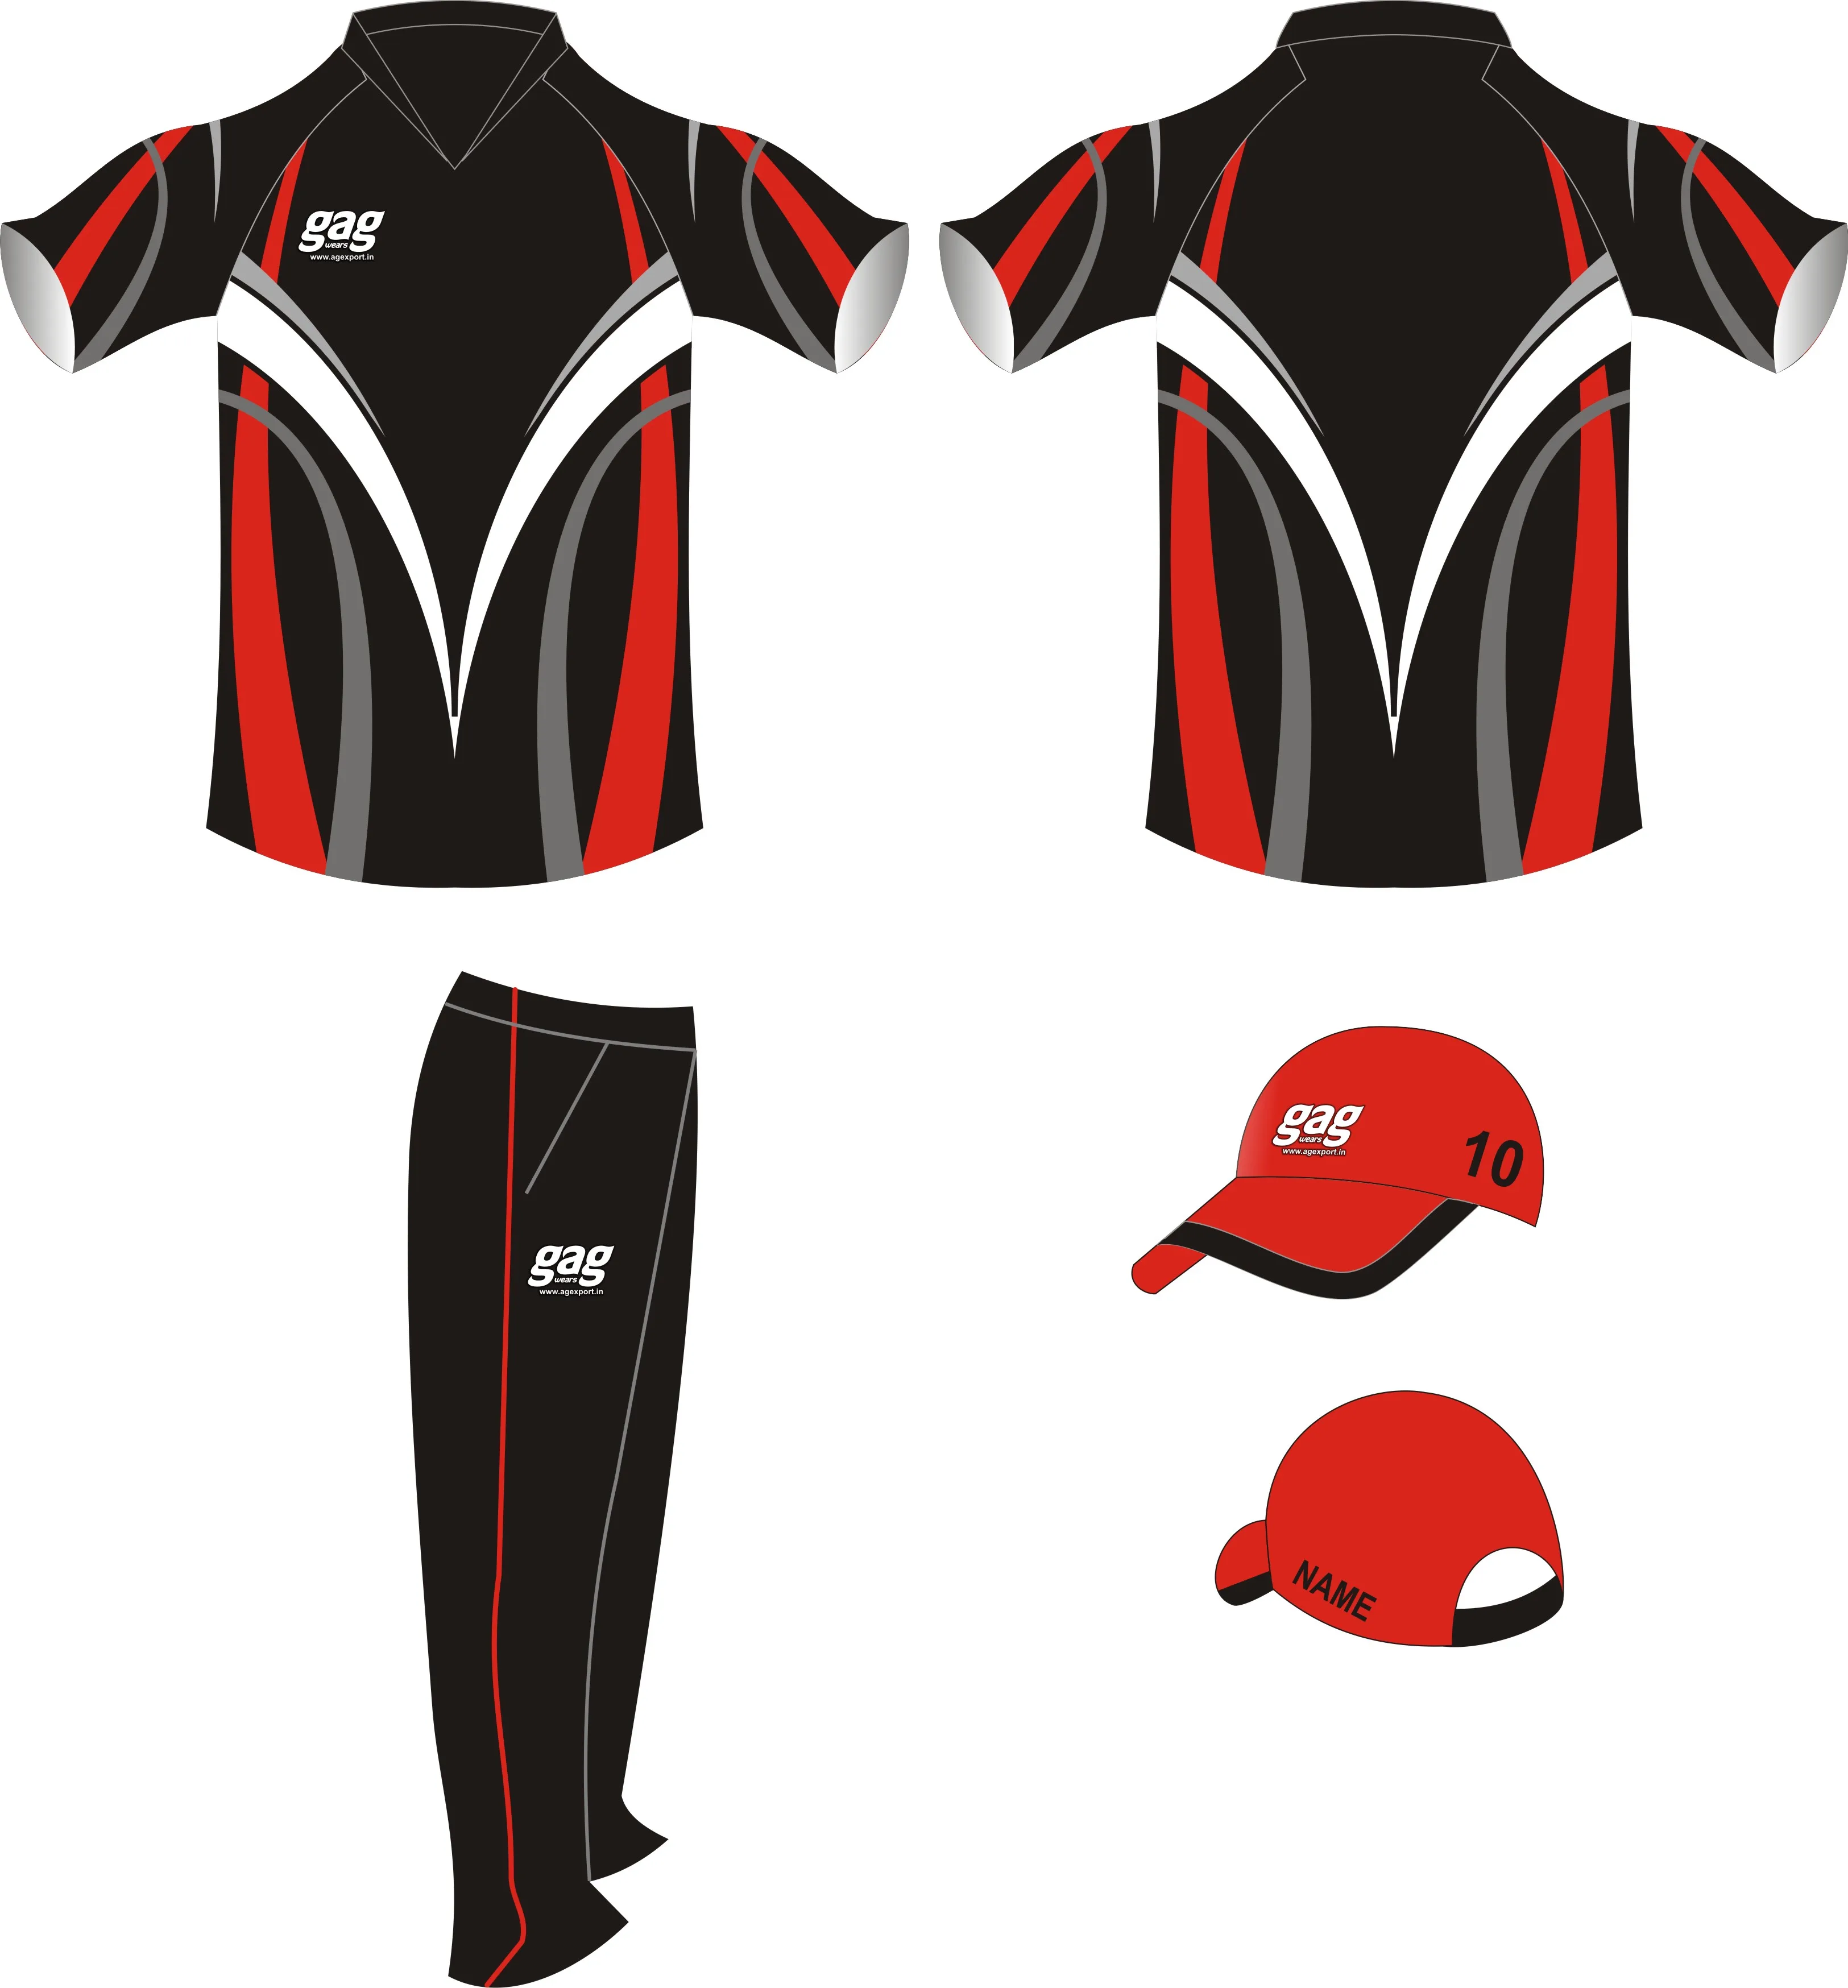 cricket sports shirts